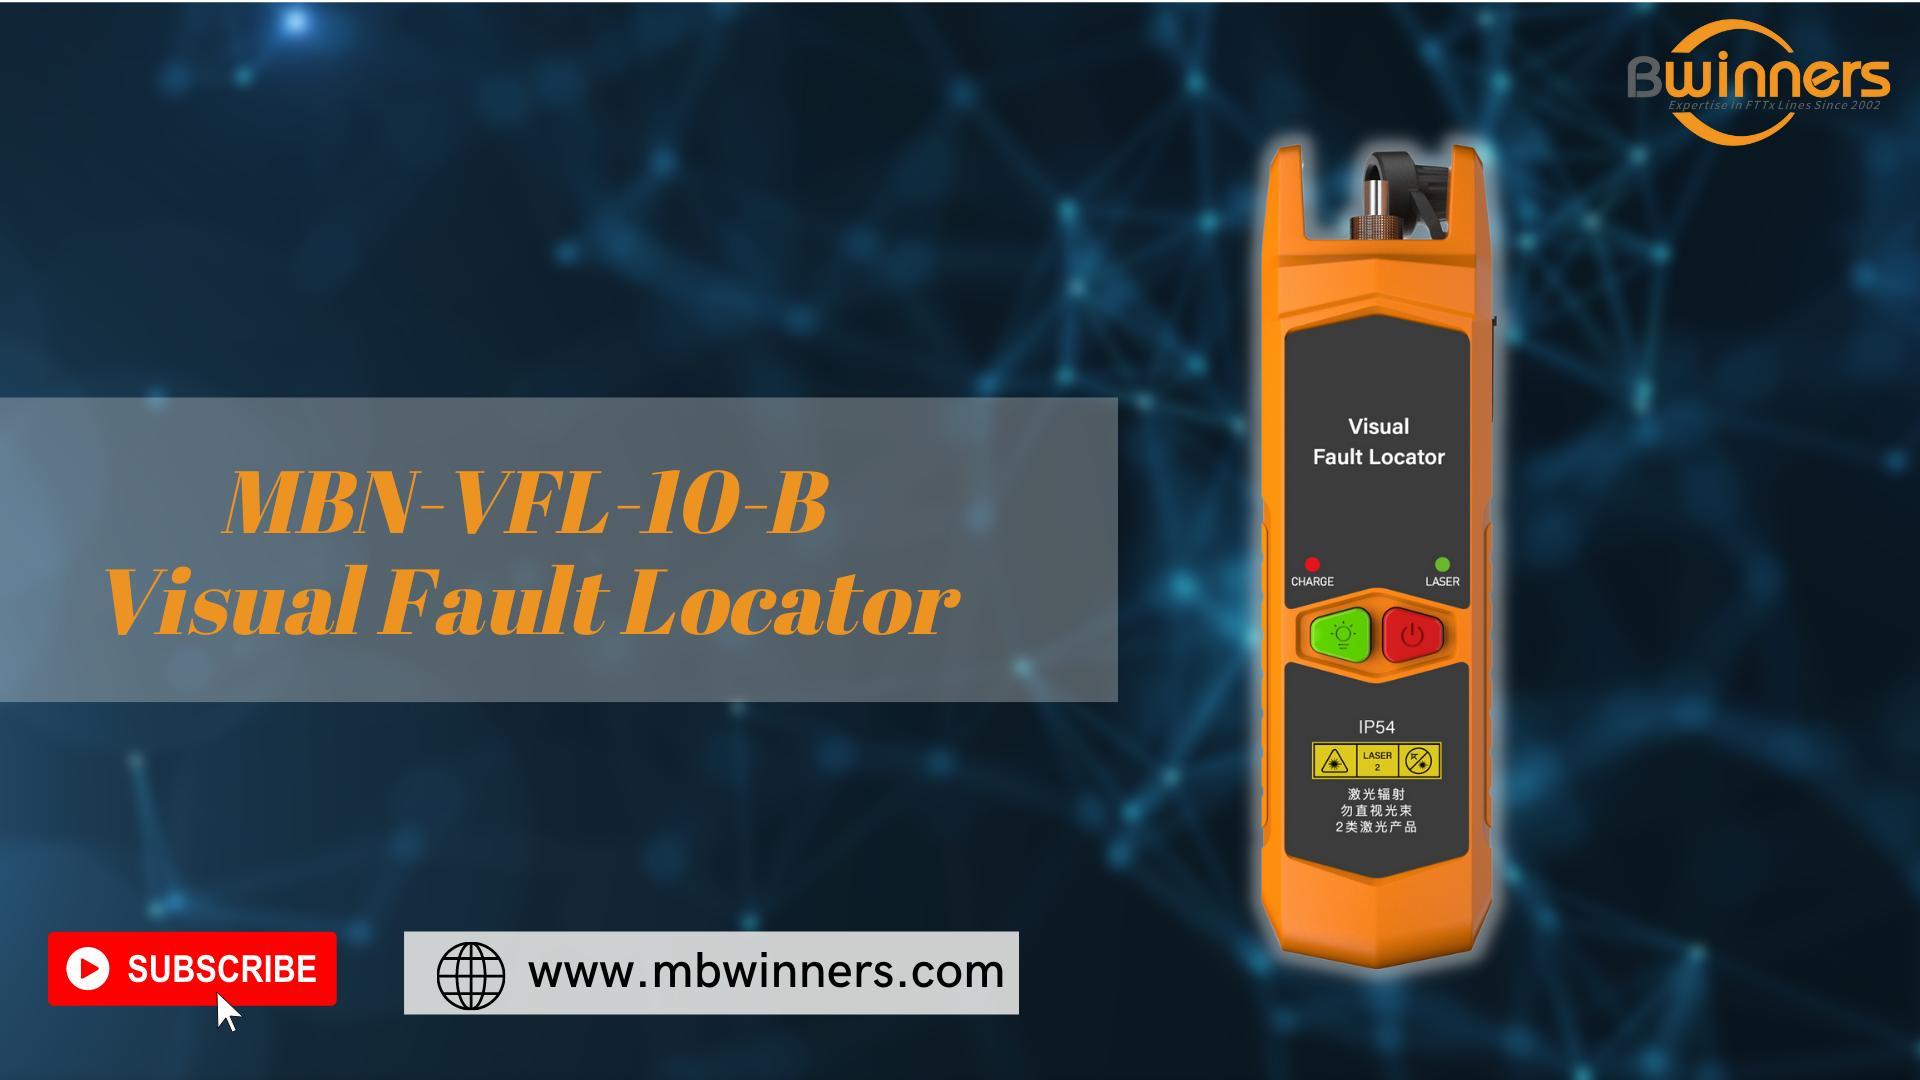  MBN-VFL-10-B Visual Fault Locator